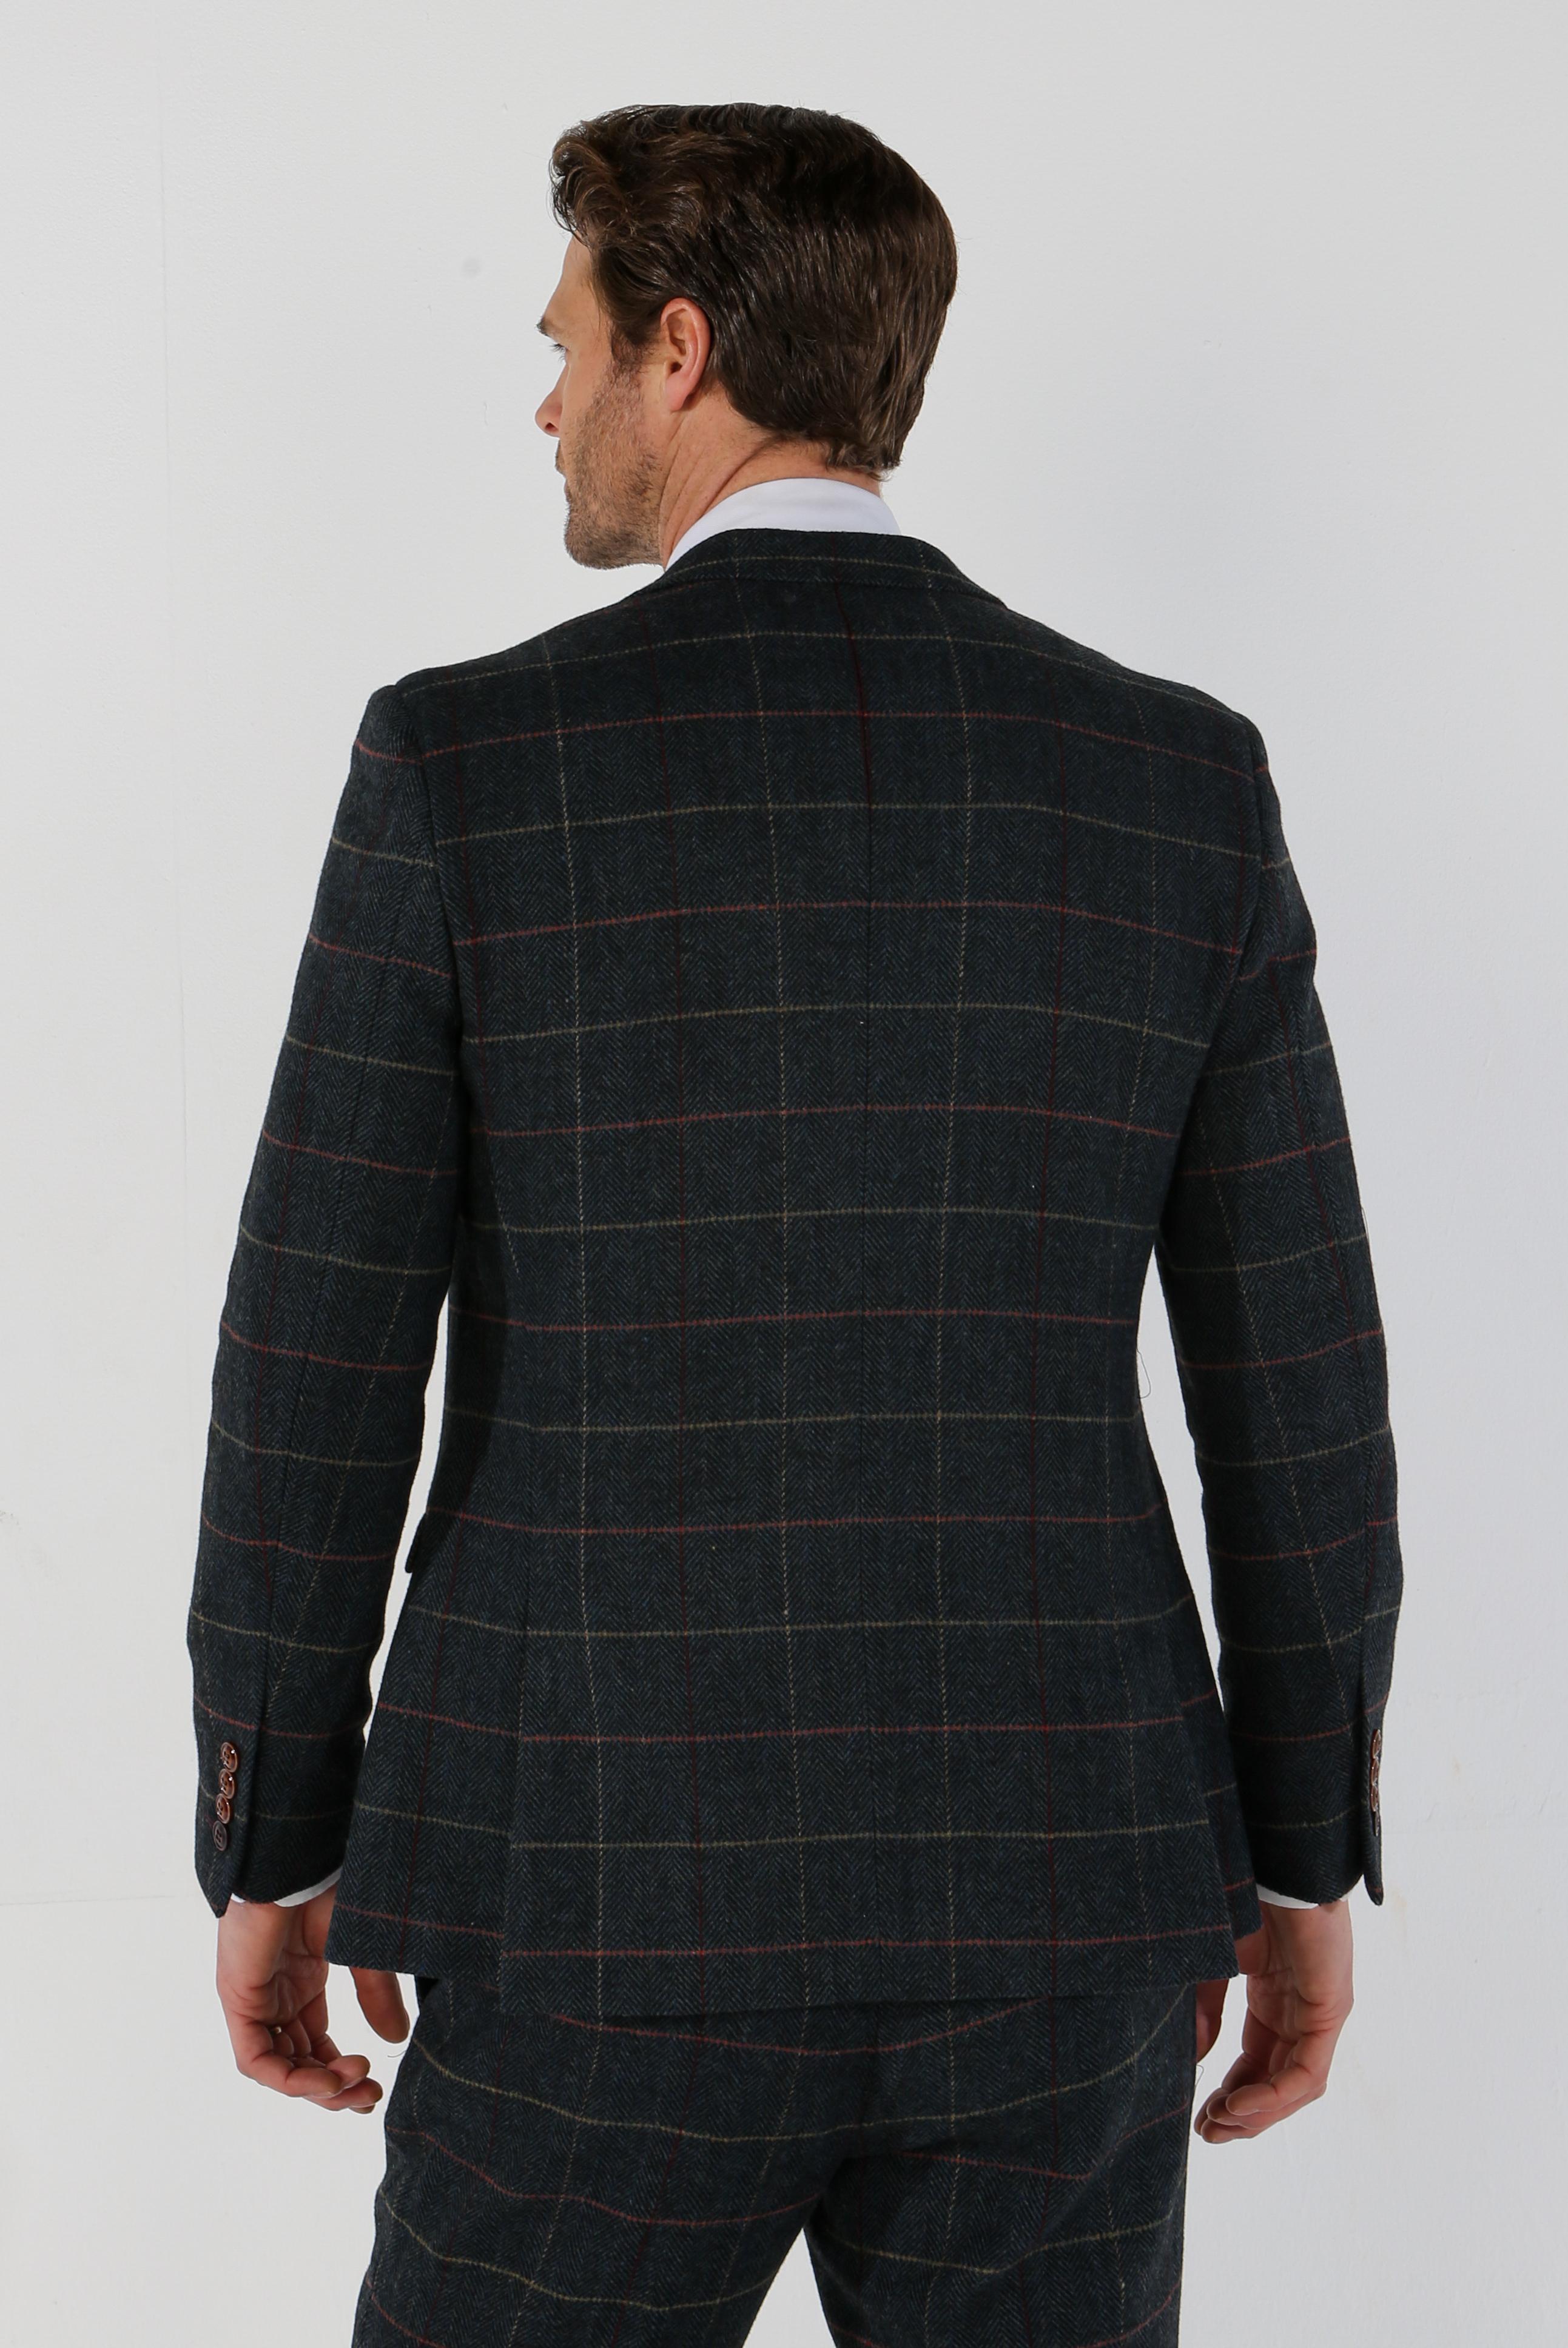 Men's Tweed Check Plaid Navy Suit Jacket - THOMAS